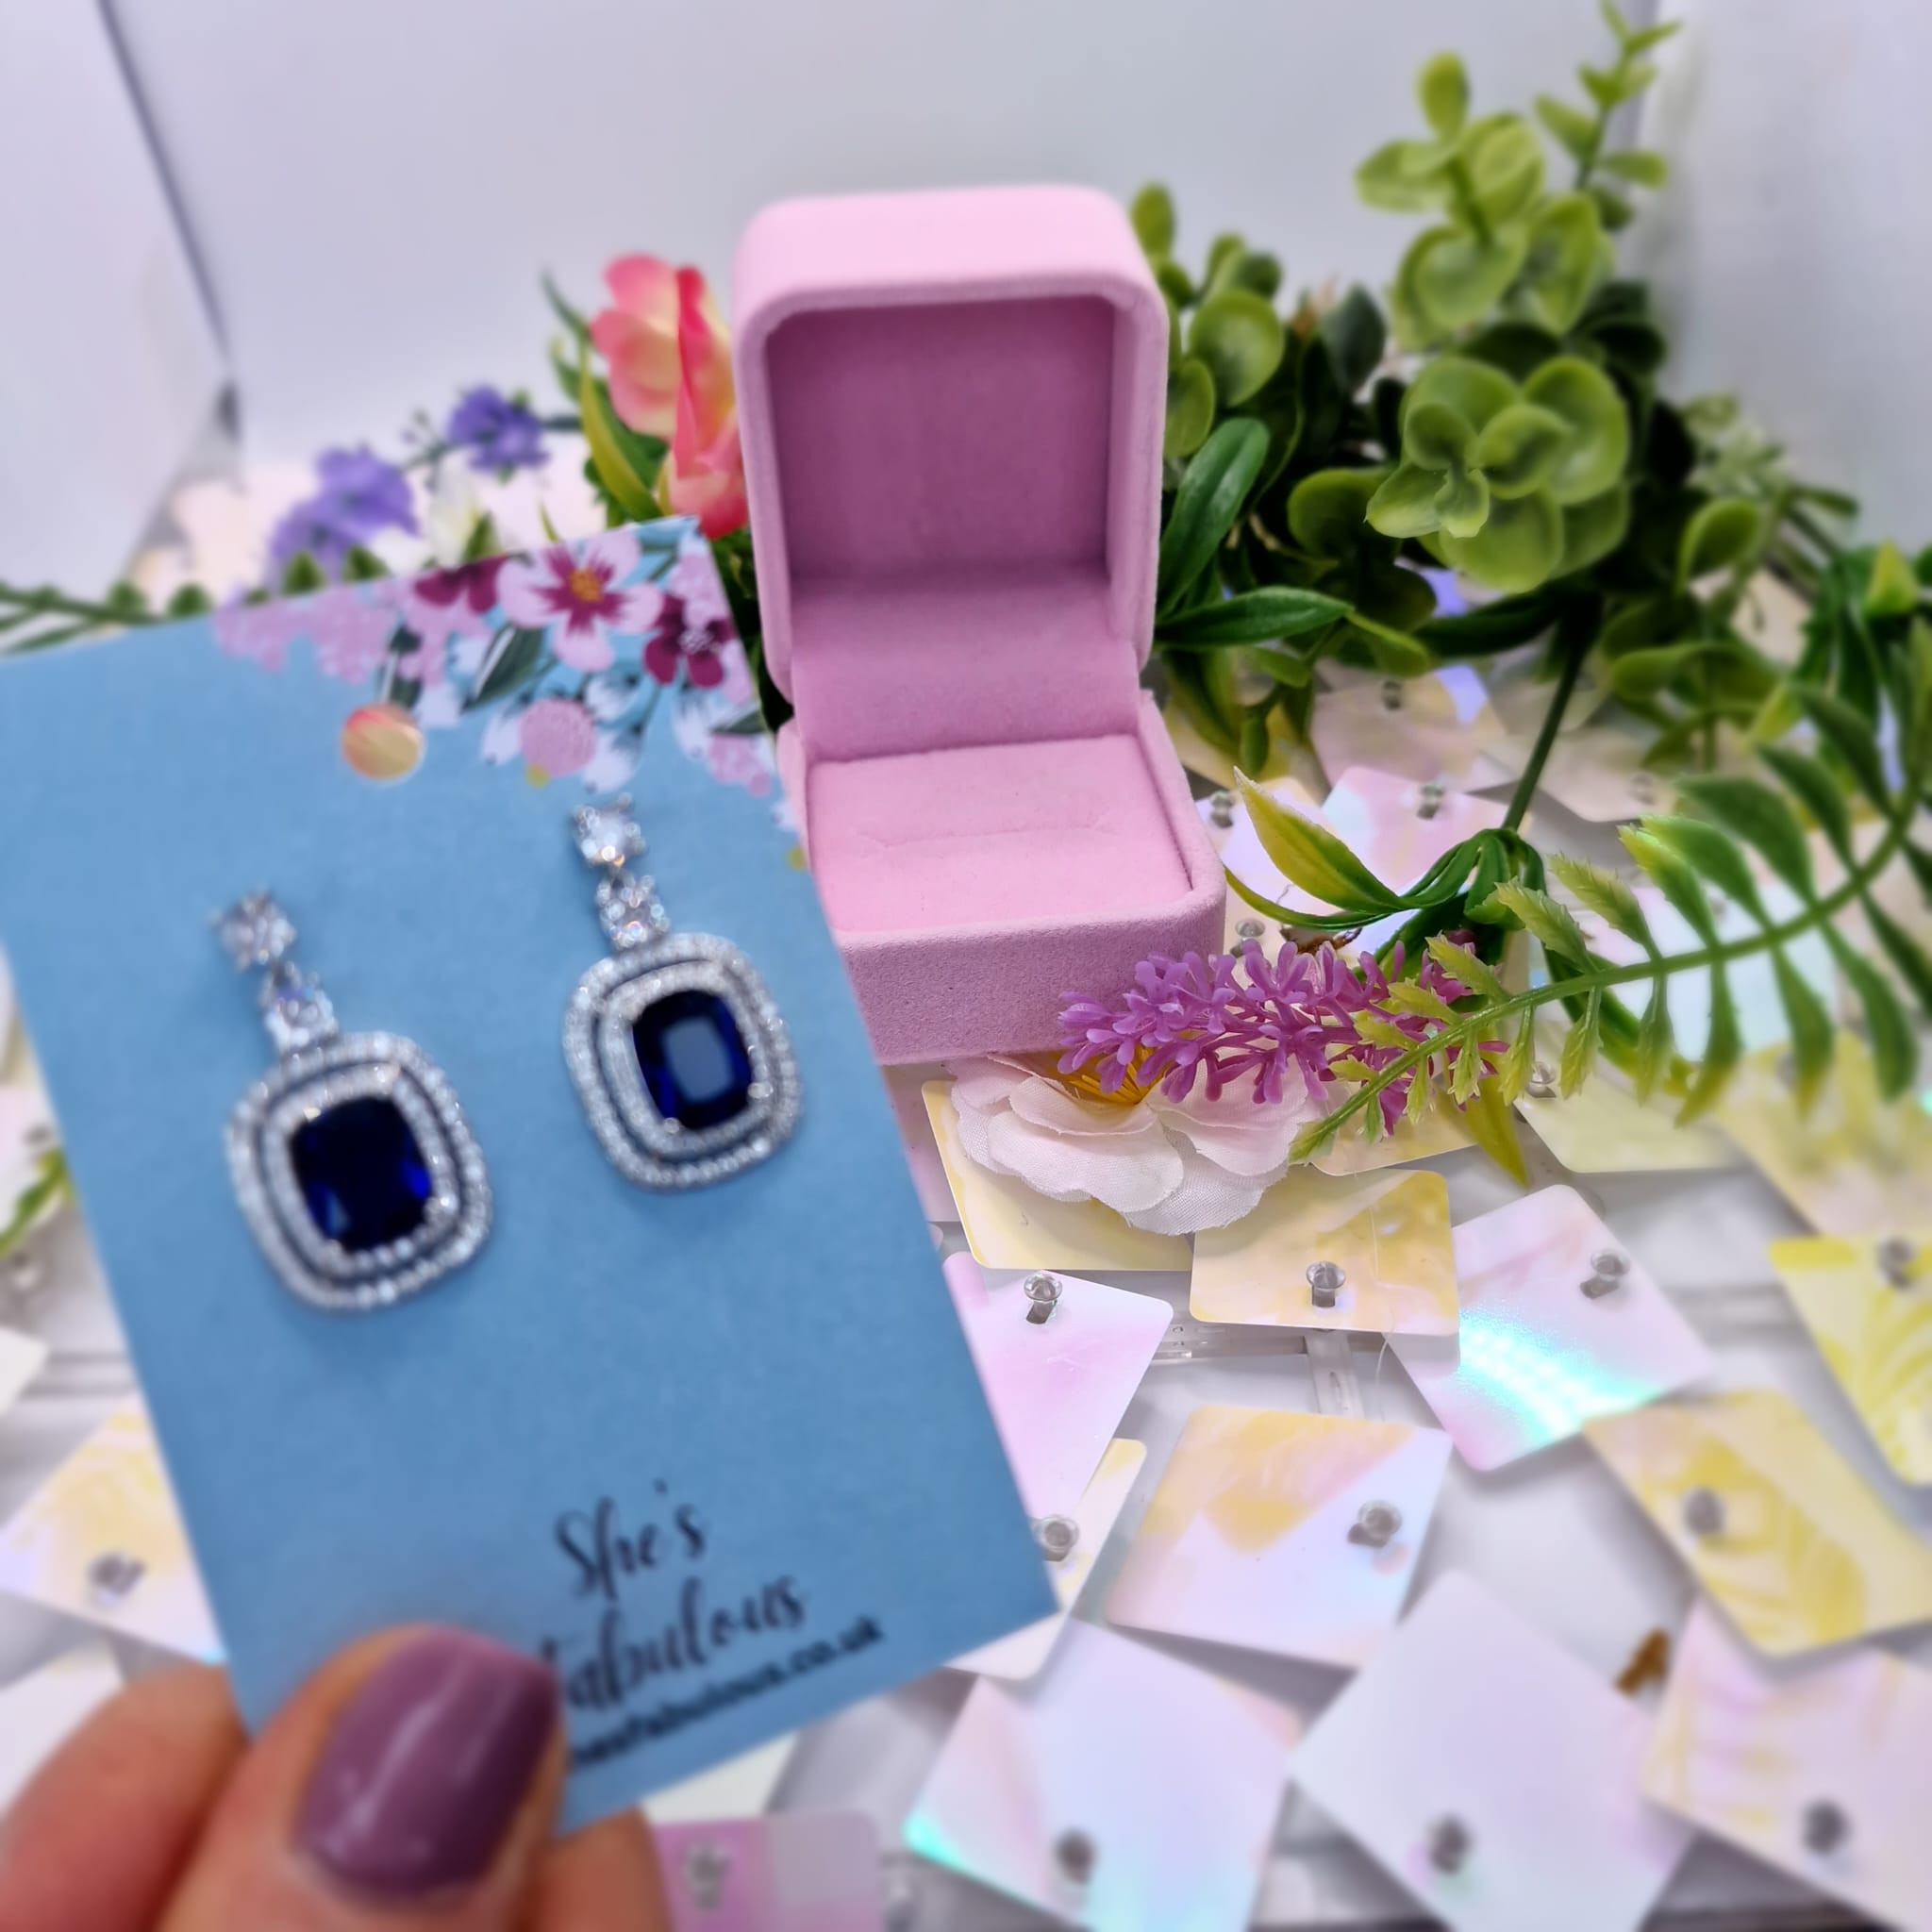 Eileen Cushion Cut Blue And Diamond Earrings